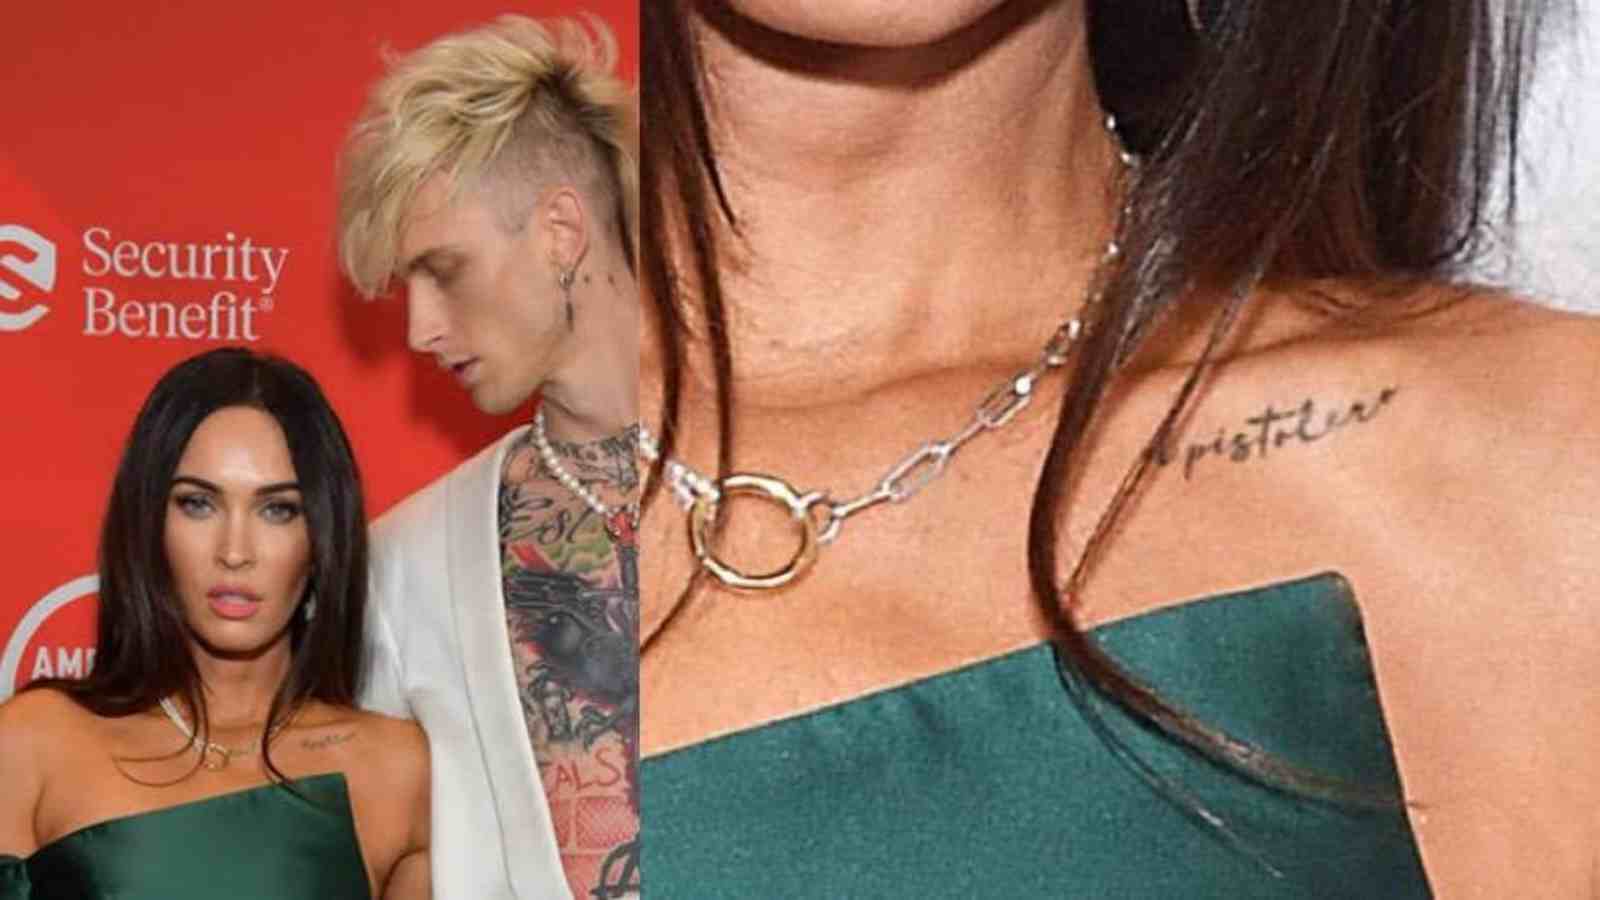 Is the collarbone tattoo of Megan Fox for Machine Gun Kelly?